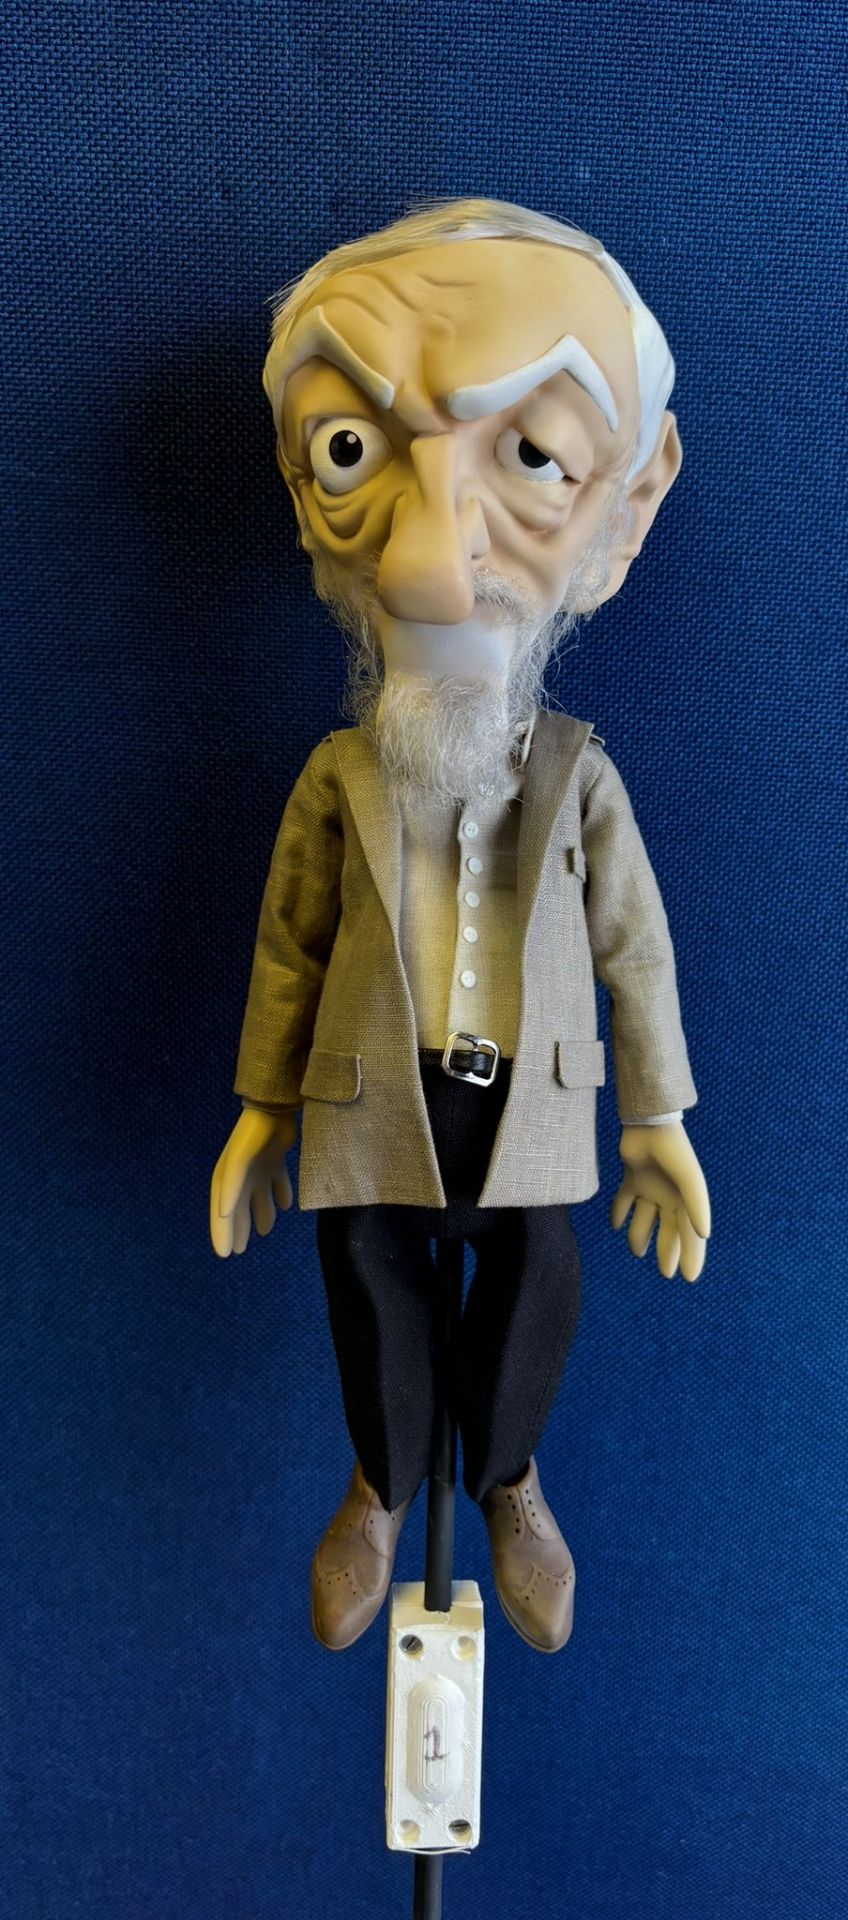 Newzoid puppet - Jeremy Corbynator - Image 2 of 3